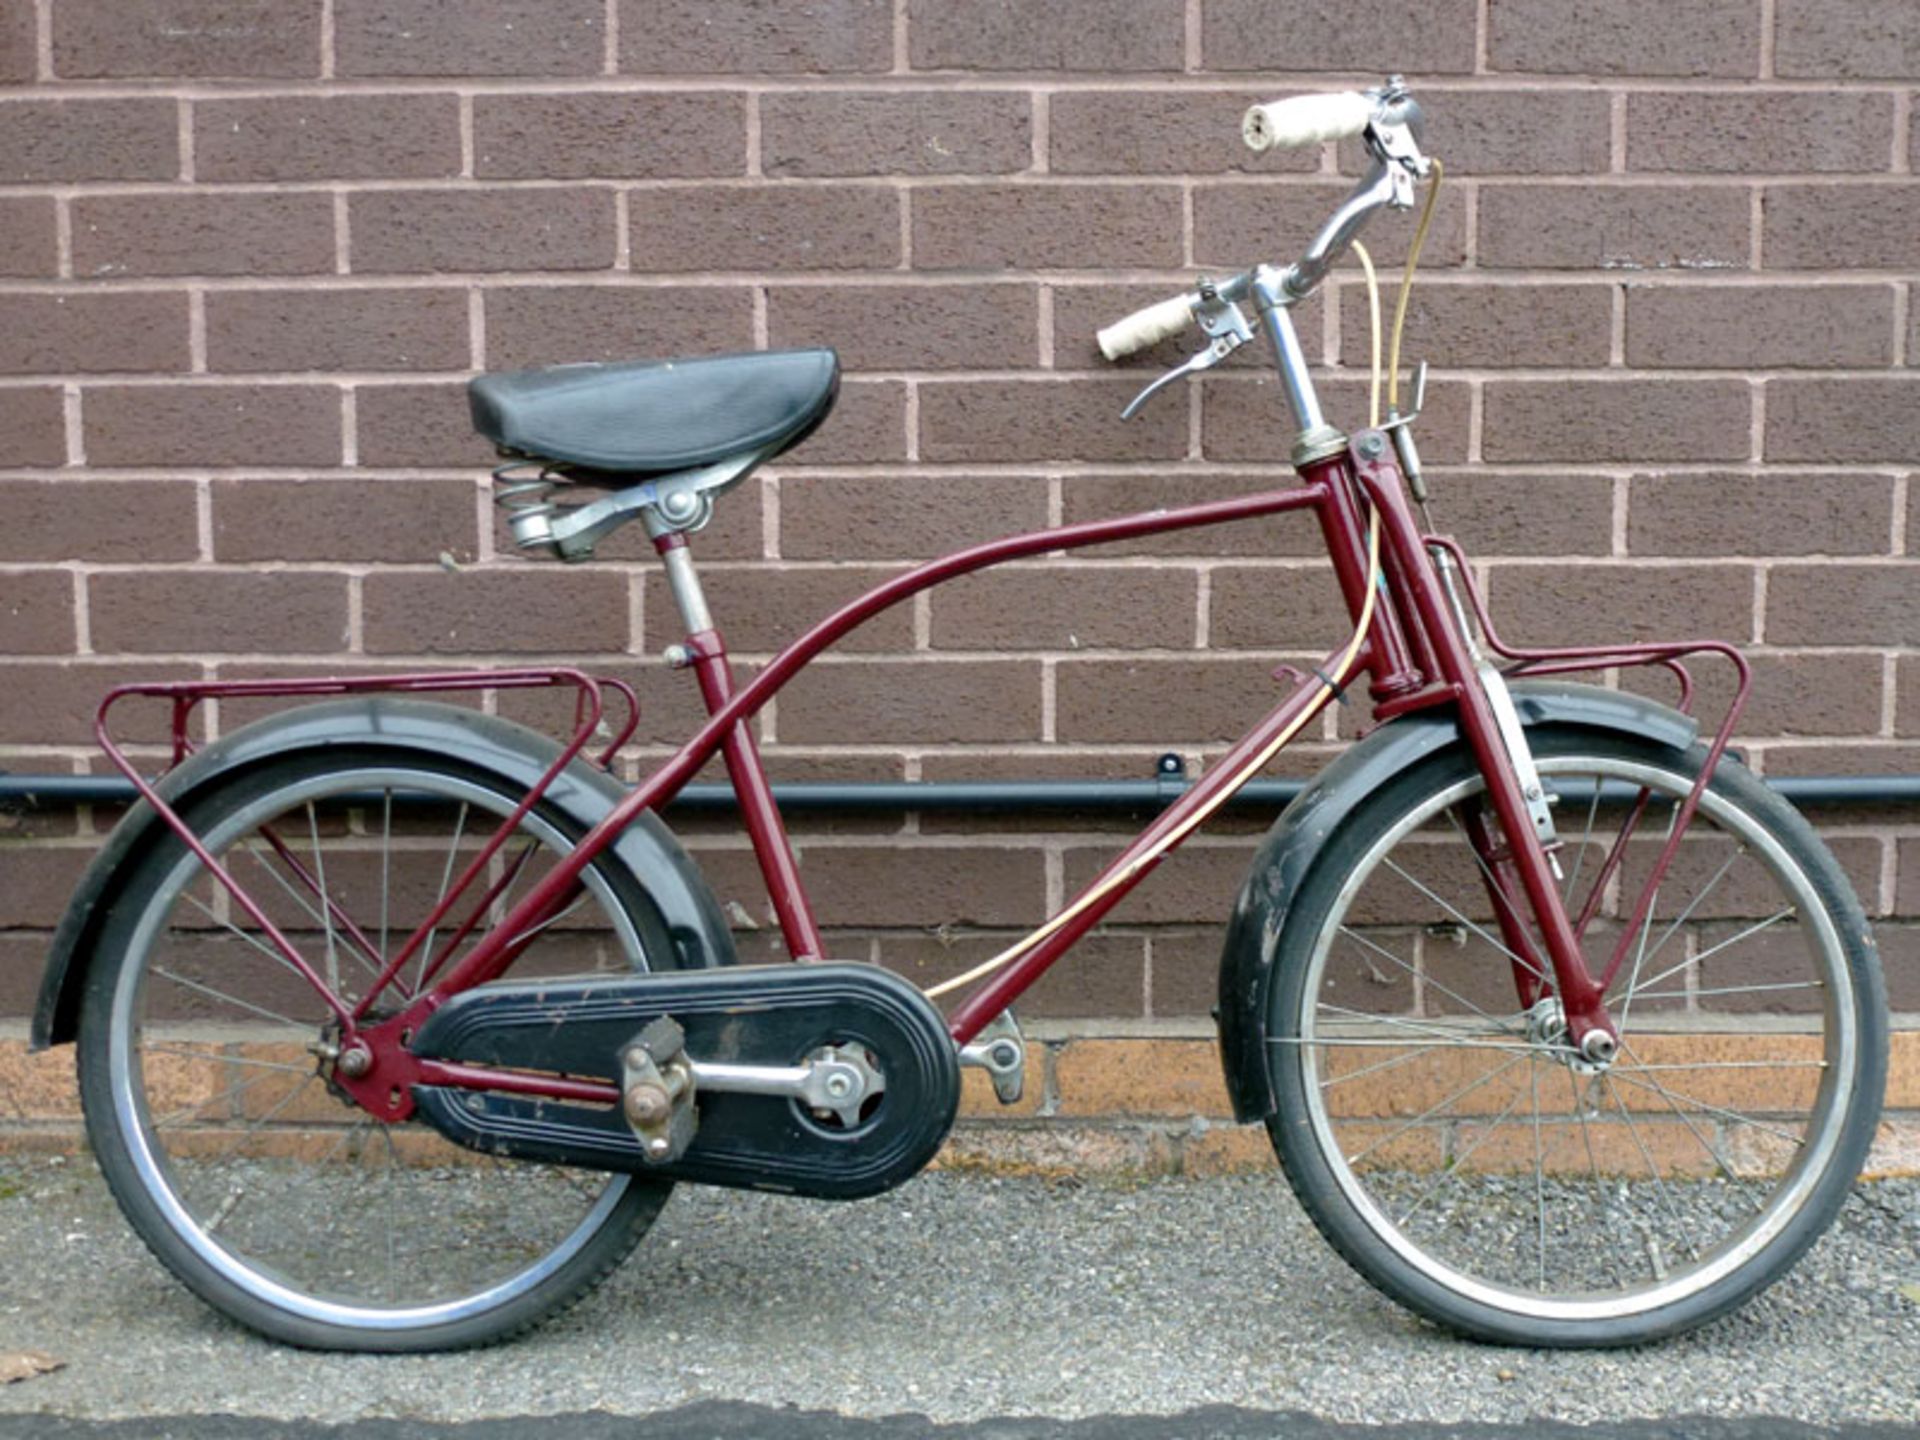 c1952 TMC 'Loop-frame' Child's Bicycle - Image 2 of 2